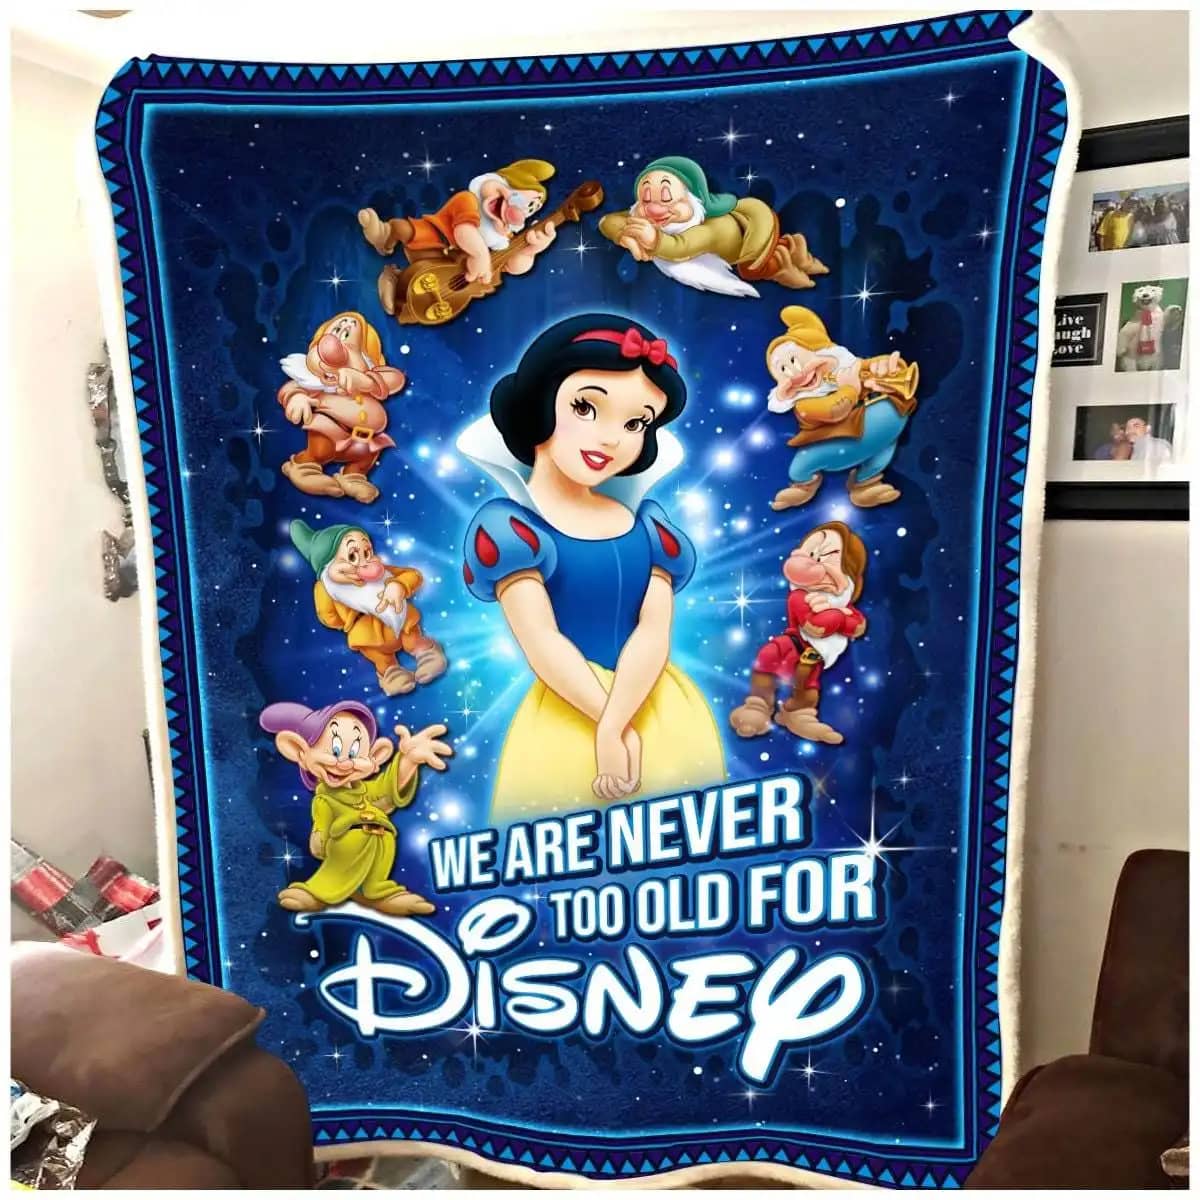 Snow White And Seven Dwarfs Disney Inspired Soft Cozy Comfy Bedroom Livingroom Office Home Decoration Fleece Blanket